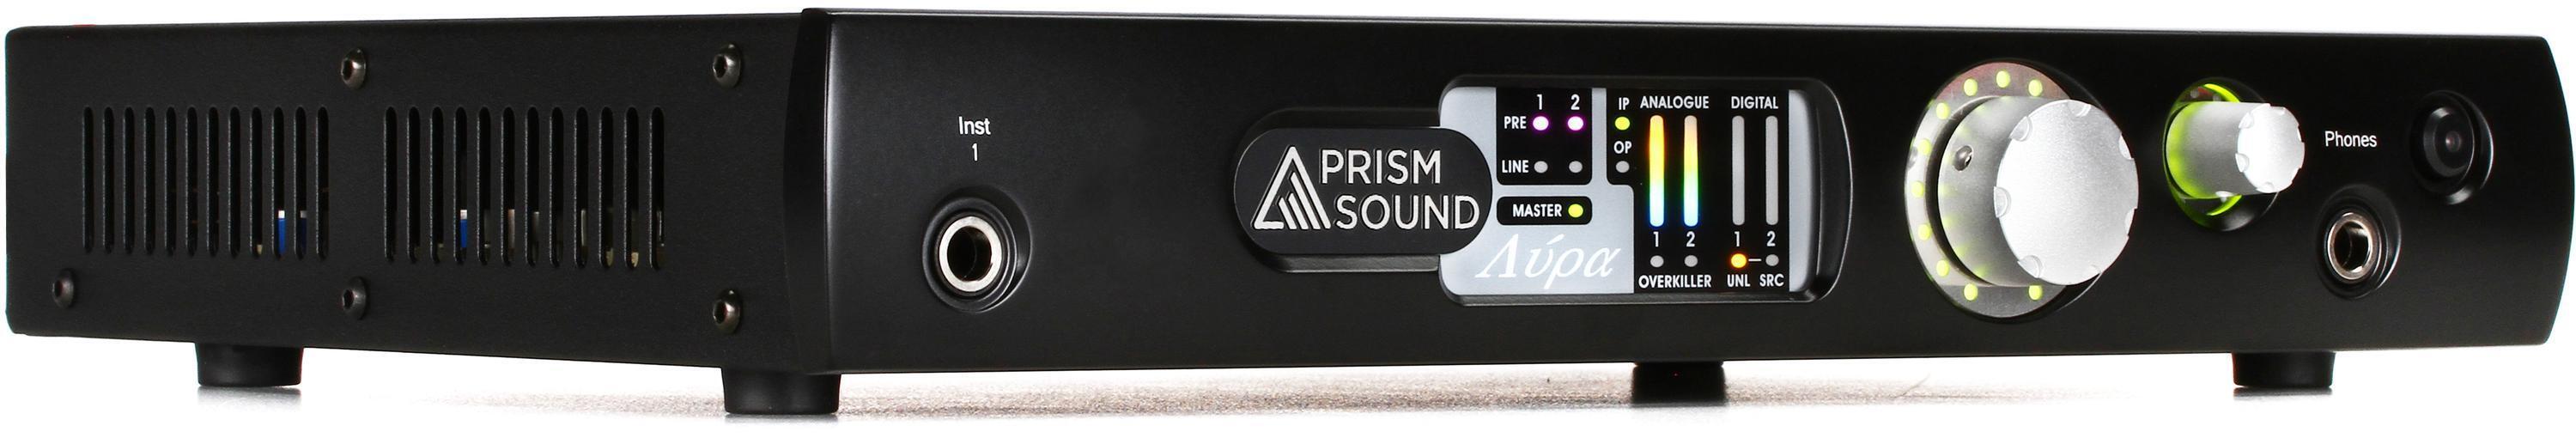 Prism Sound Lyra 1 2x2 USB Audio Interface | Sweetwater